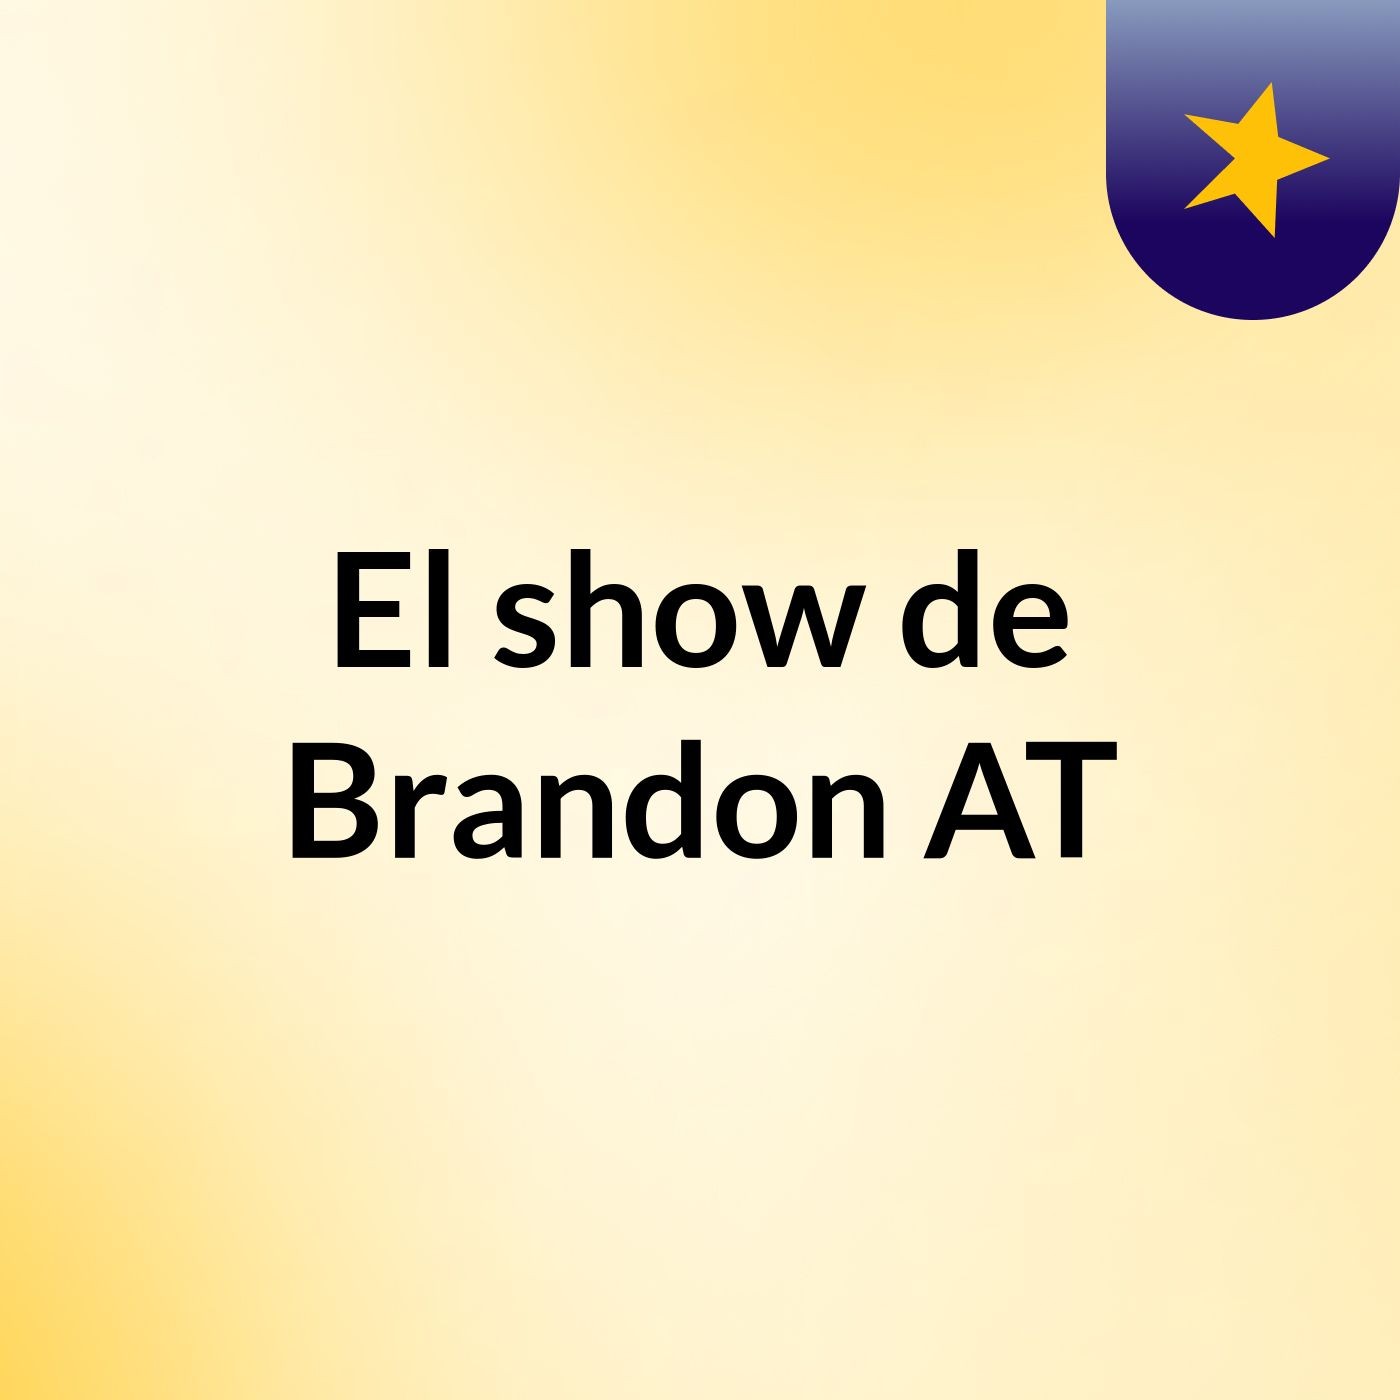 El show de Brandon AT